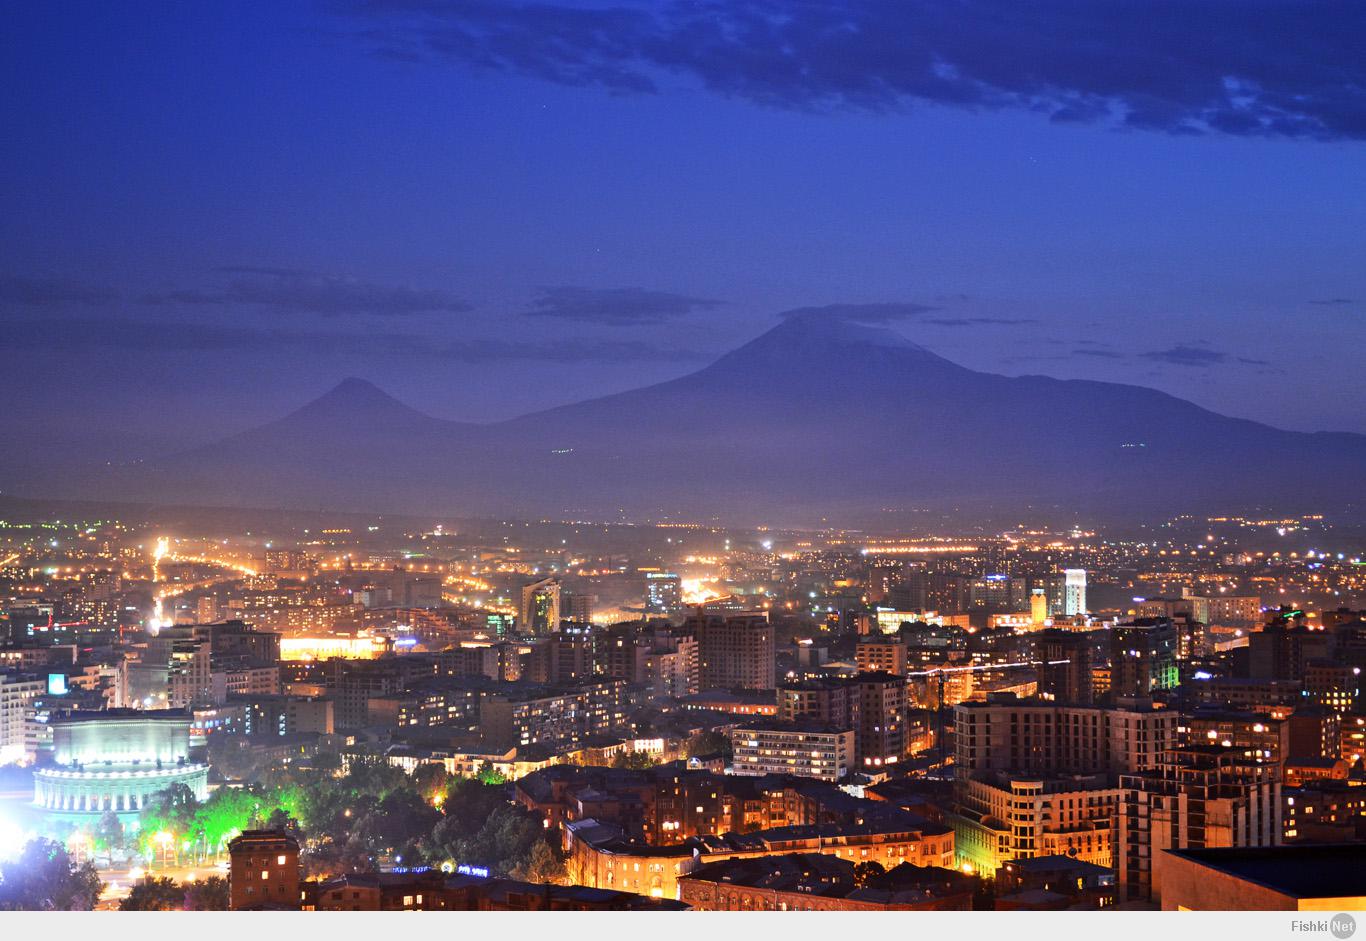 Ночной ереван. Столица Армении Ереван. Еревани столица Армения. Ночной Ереван с Араратом. Армения столица Ереван панорама.